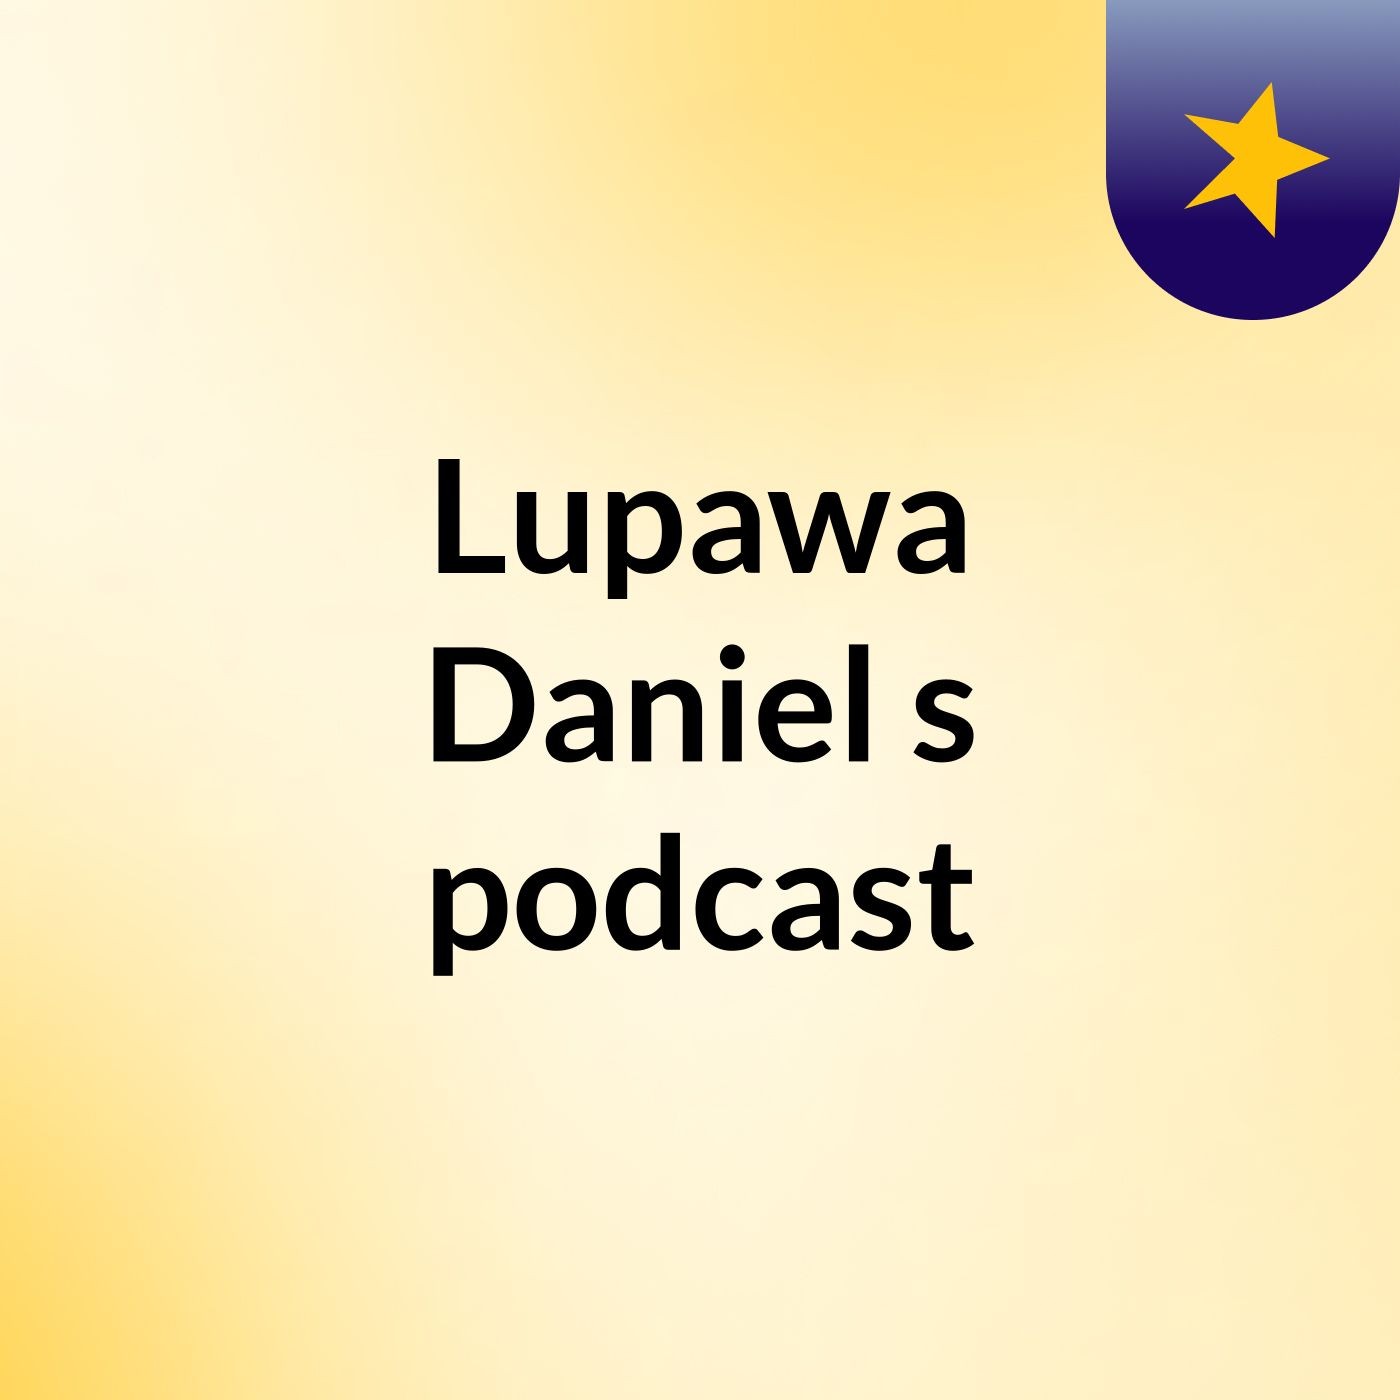 Episode 8 - Lupawa Daniel's podcast